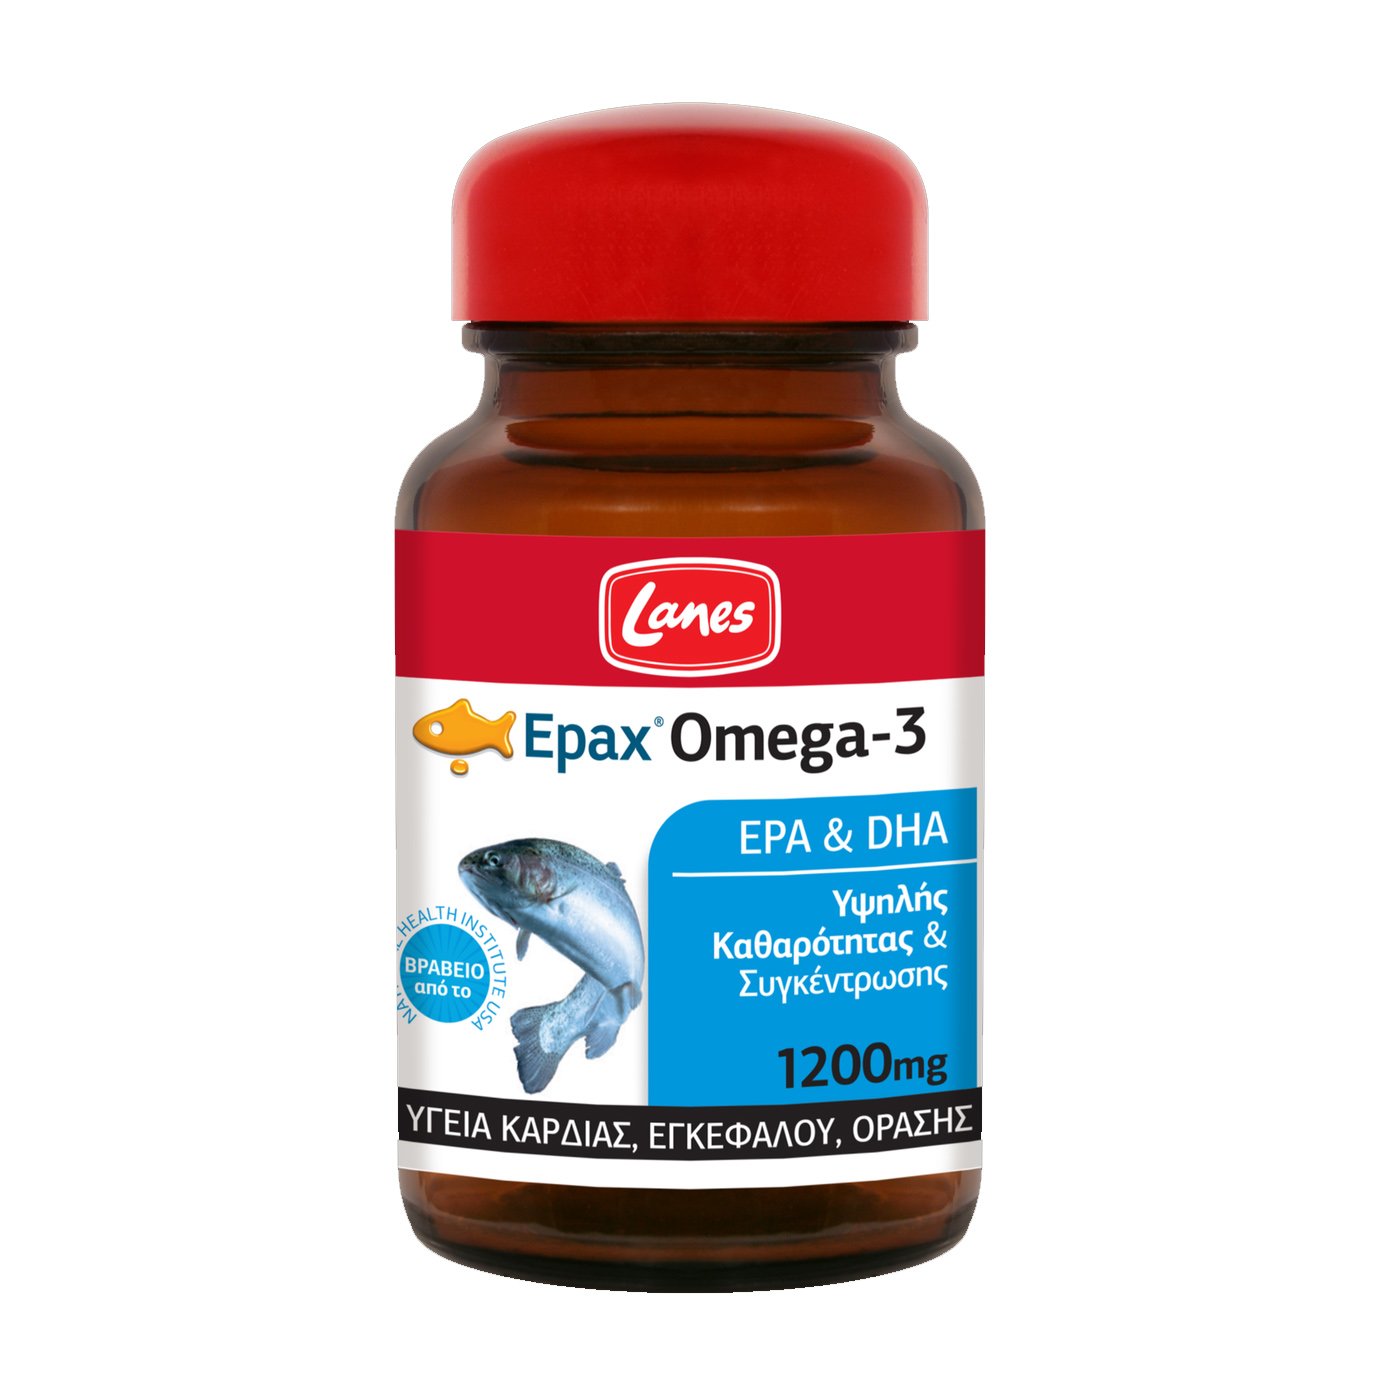 Lanes Epax Omega – 3 ( EPA & DHA) 1200mg 30 caps